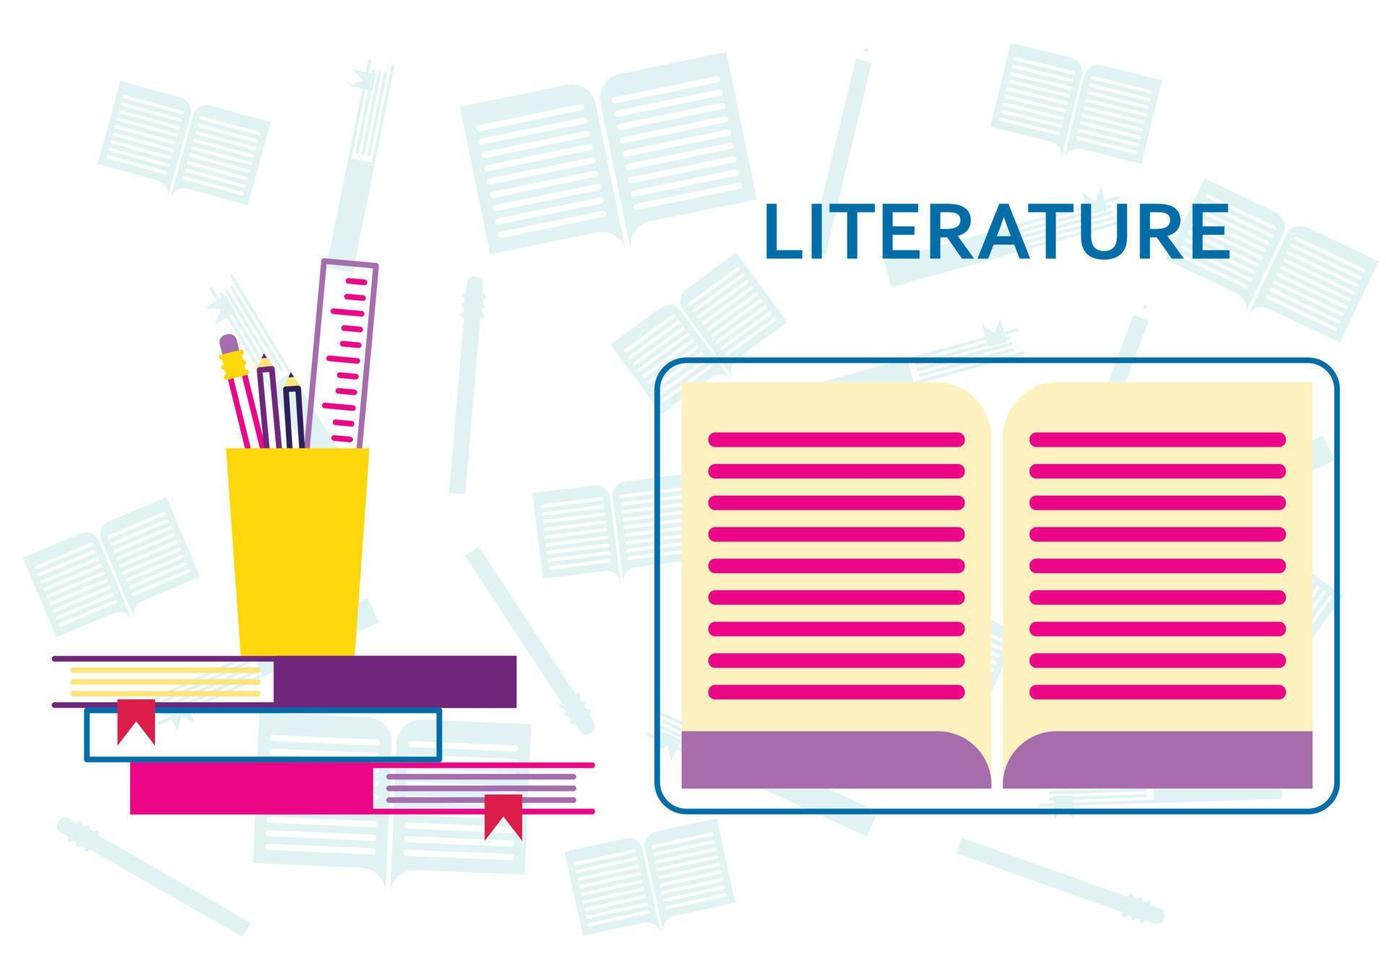 Literature lesson vector illustration. Reading, education, e-book, literature, encyclopedia. Vector illustration in flat style.